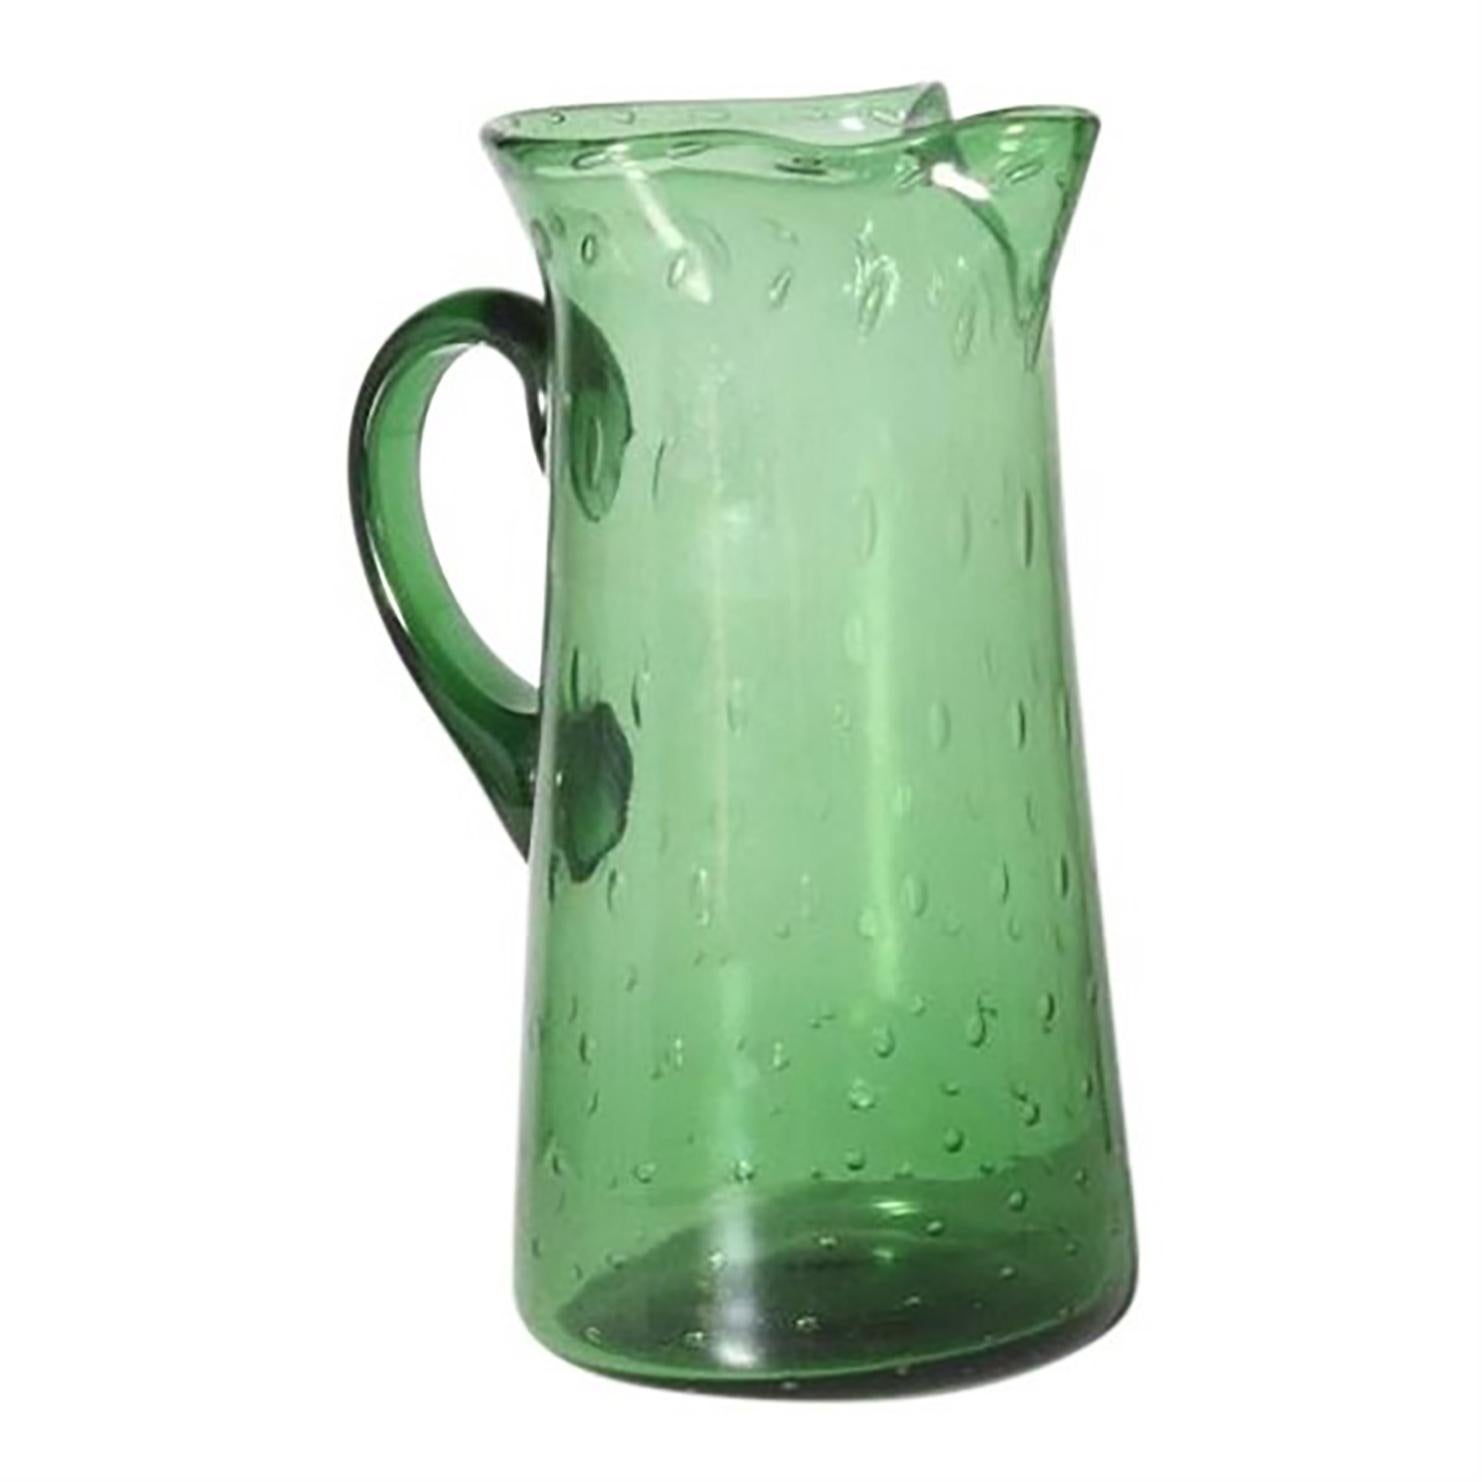 Empoli green pitcher, circa 1950.